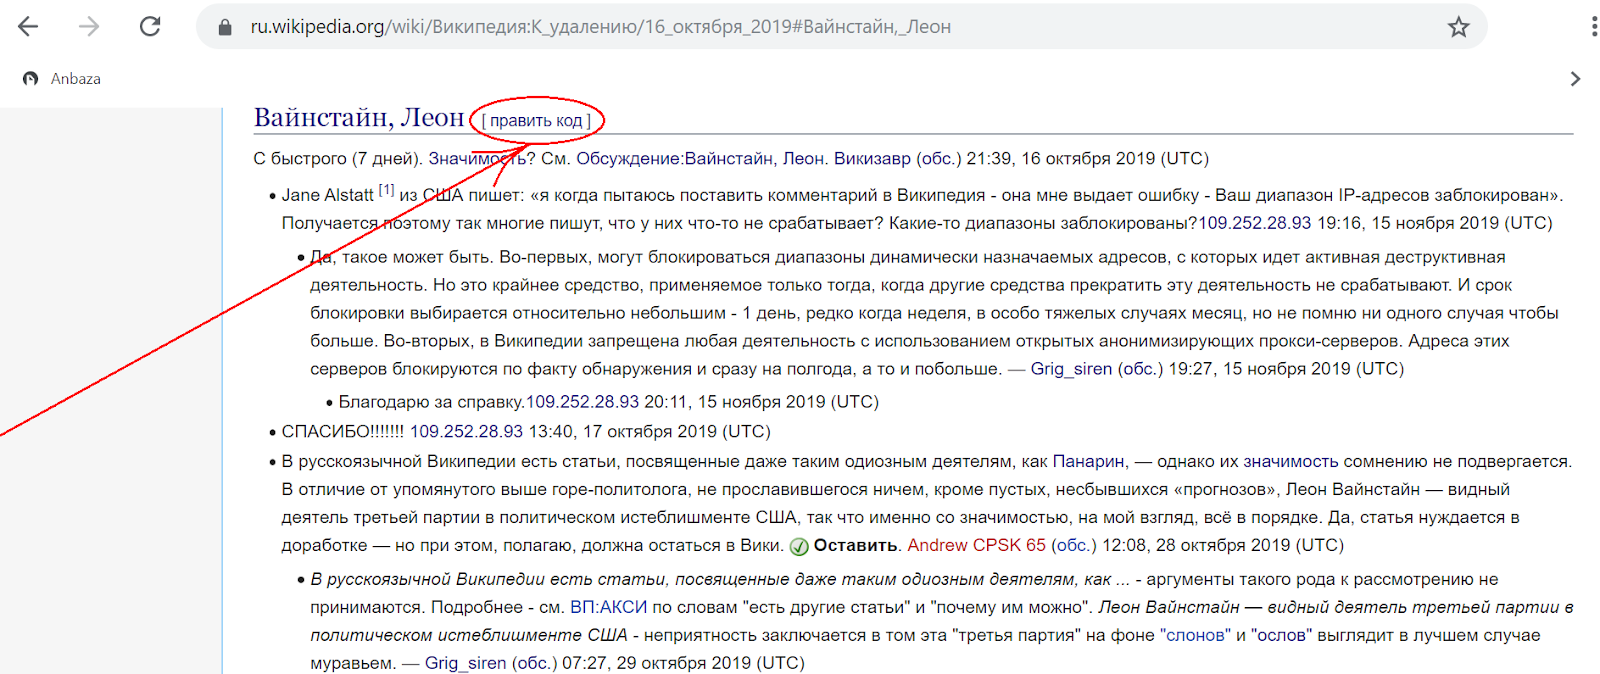 Https ru wikipedia org wiki википедия. Википедия цвета ссылок. Скриншоты изменений в Википедии. Wiki org.